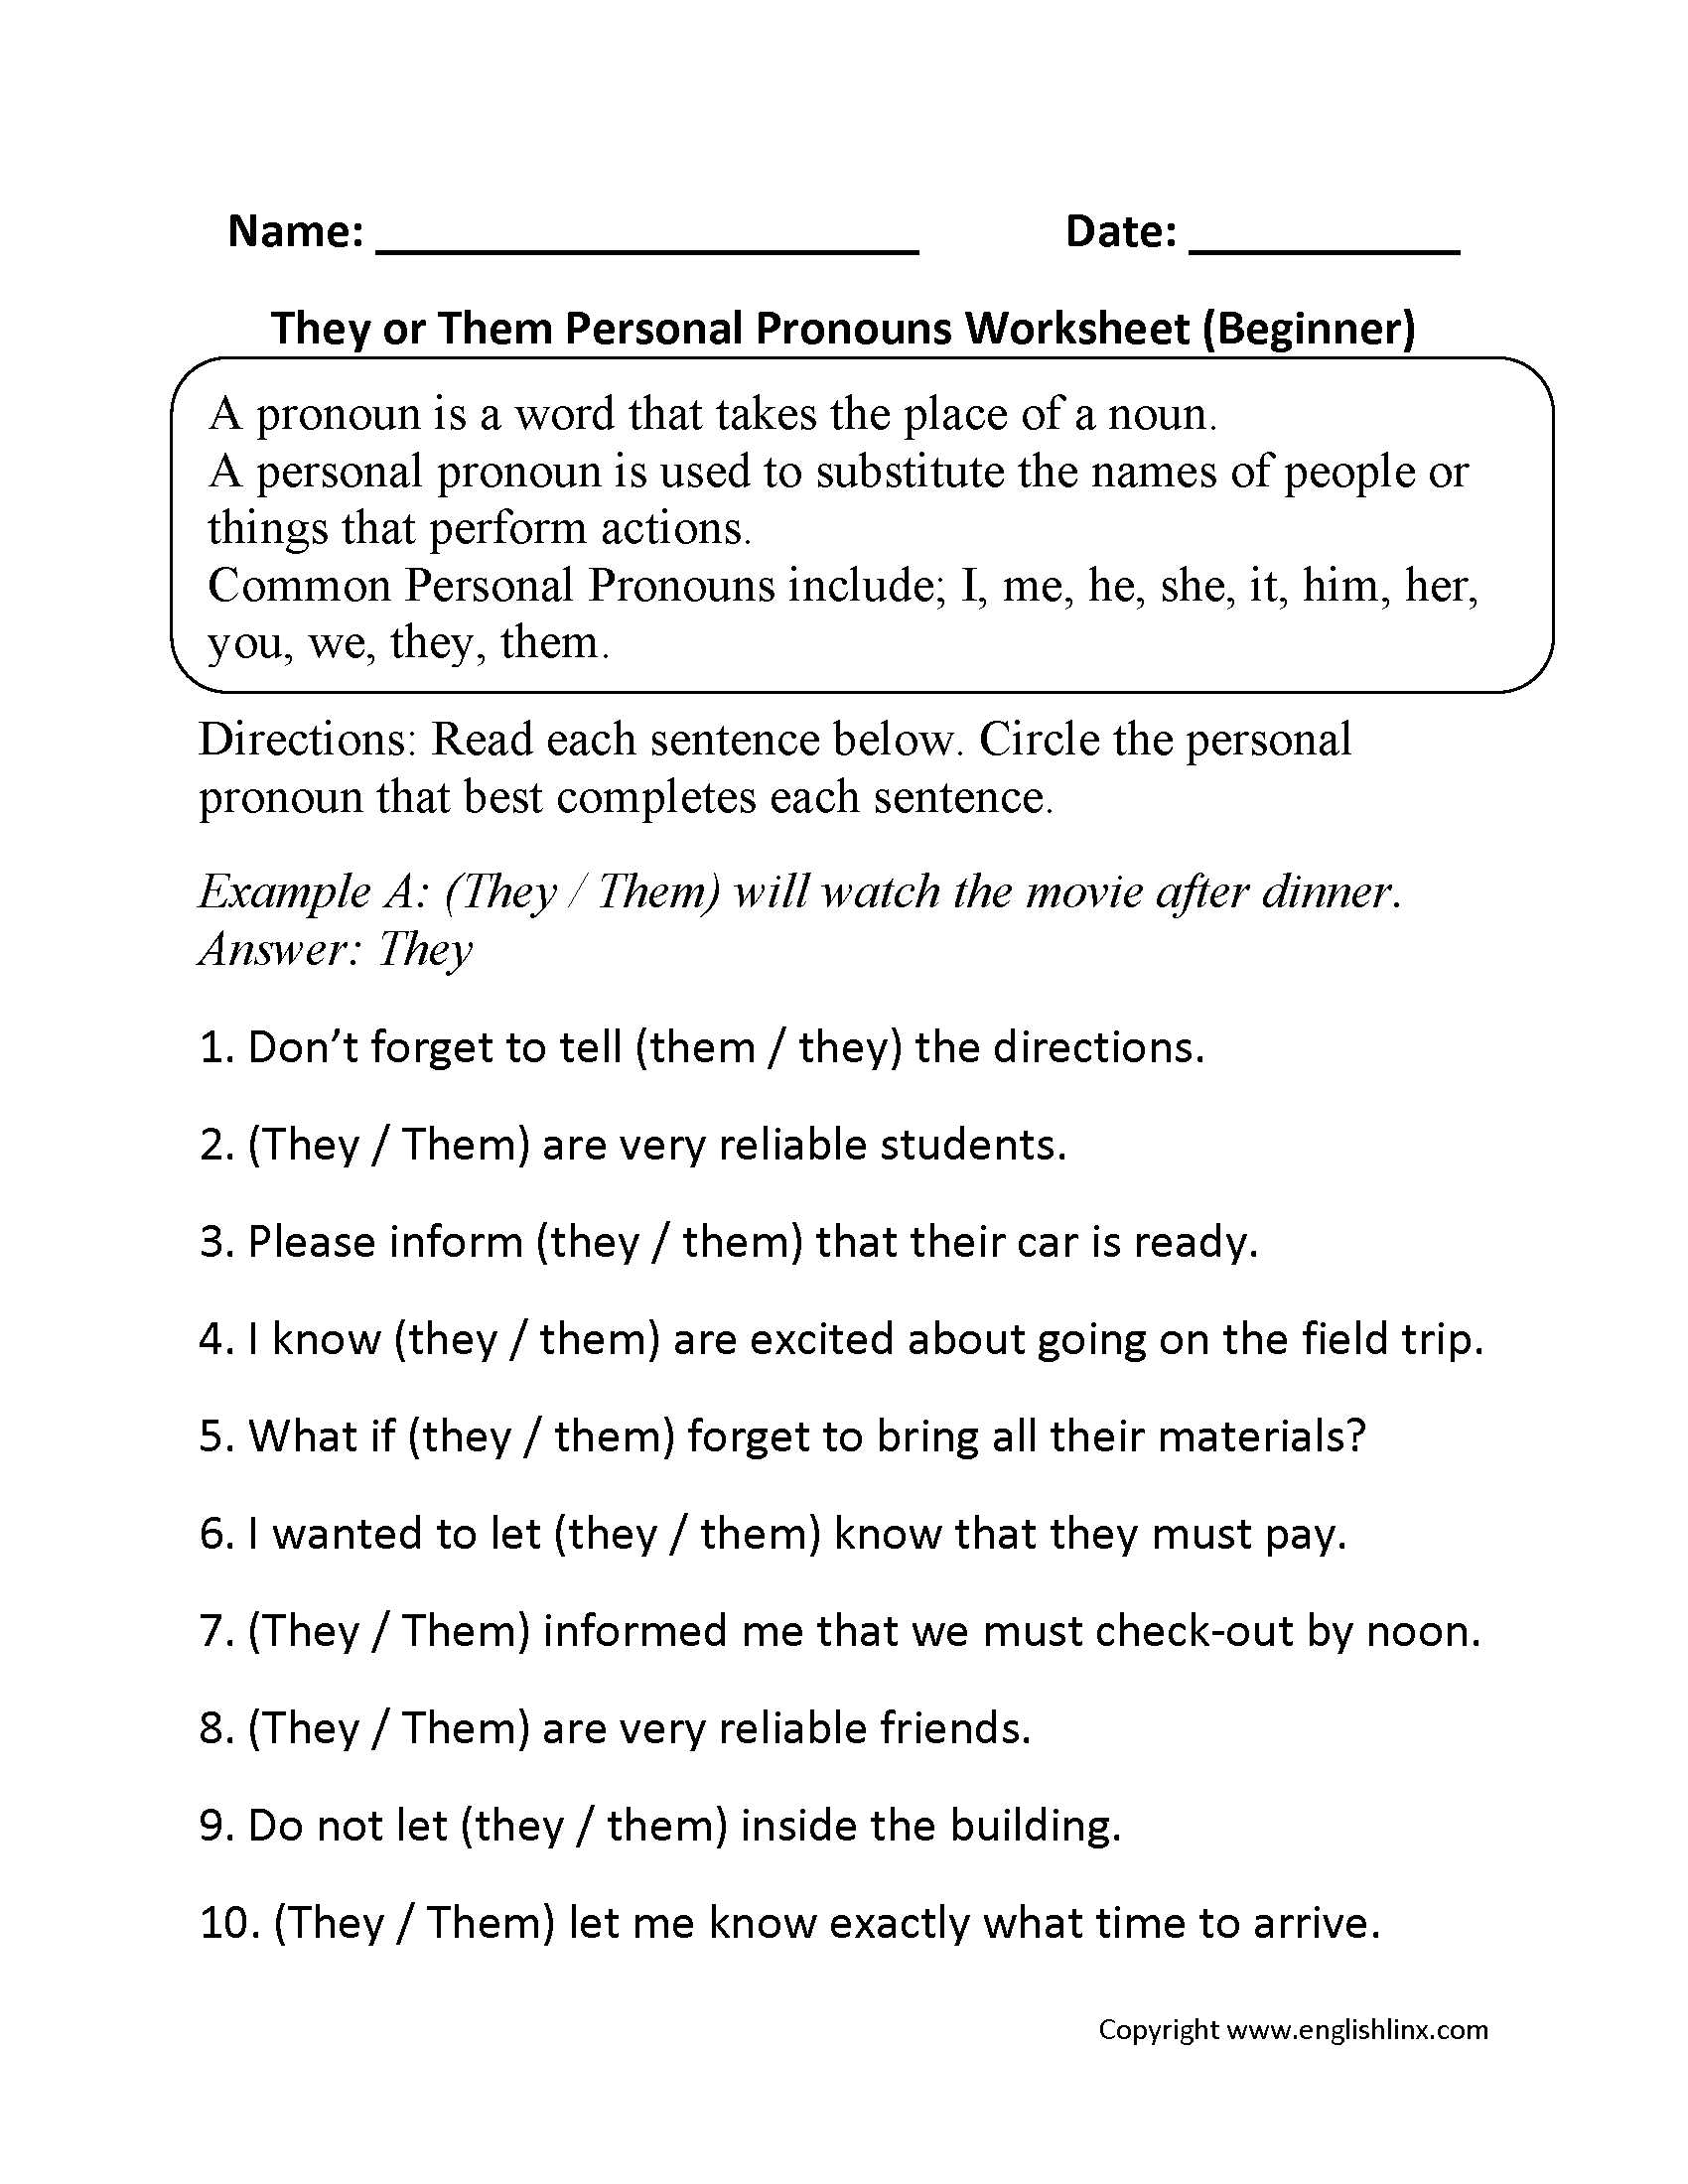 Rhyming Words Worksheets for Kindergarten as Well as He She It Worksheets for Kindergarten Pdf Kidz Activities